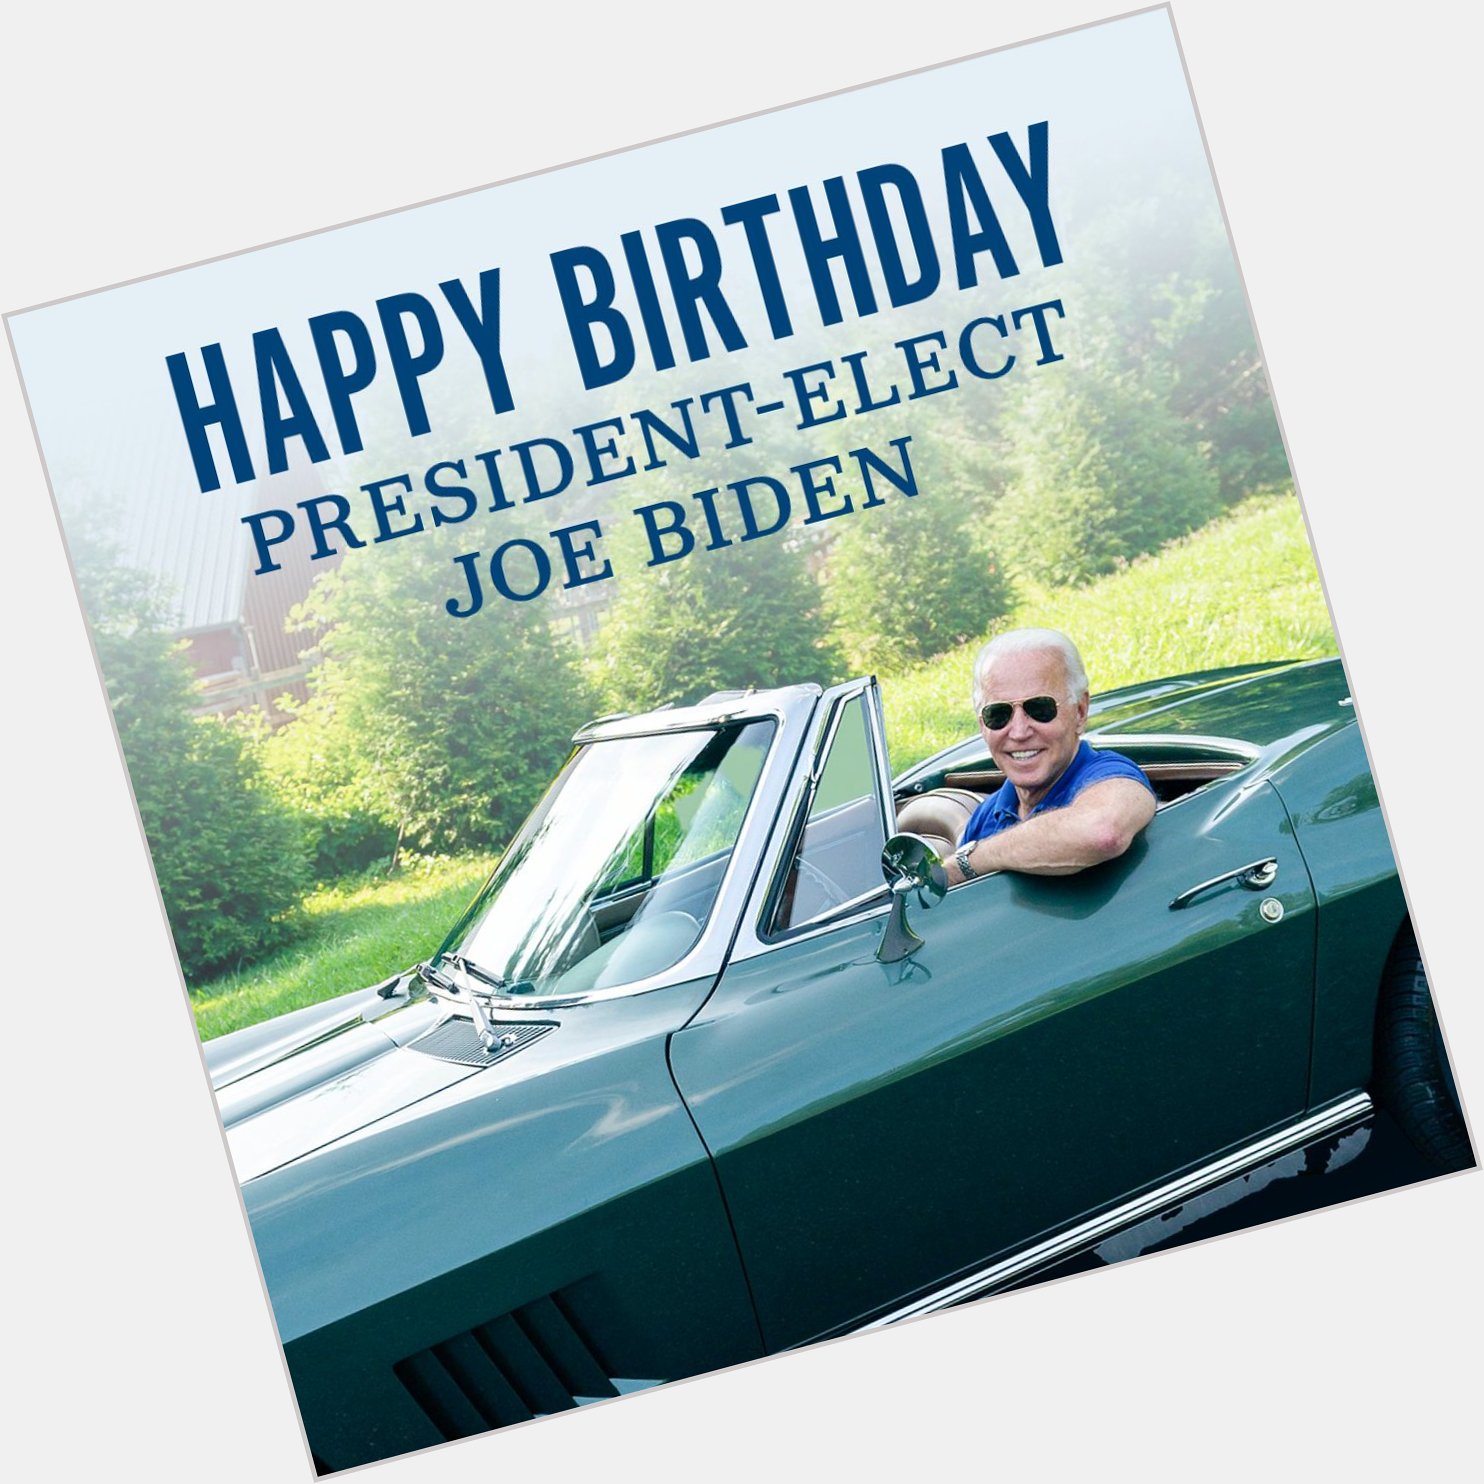 Happy birthday to our President-elect, Joe Biden!  